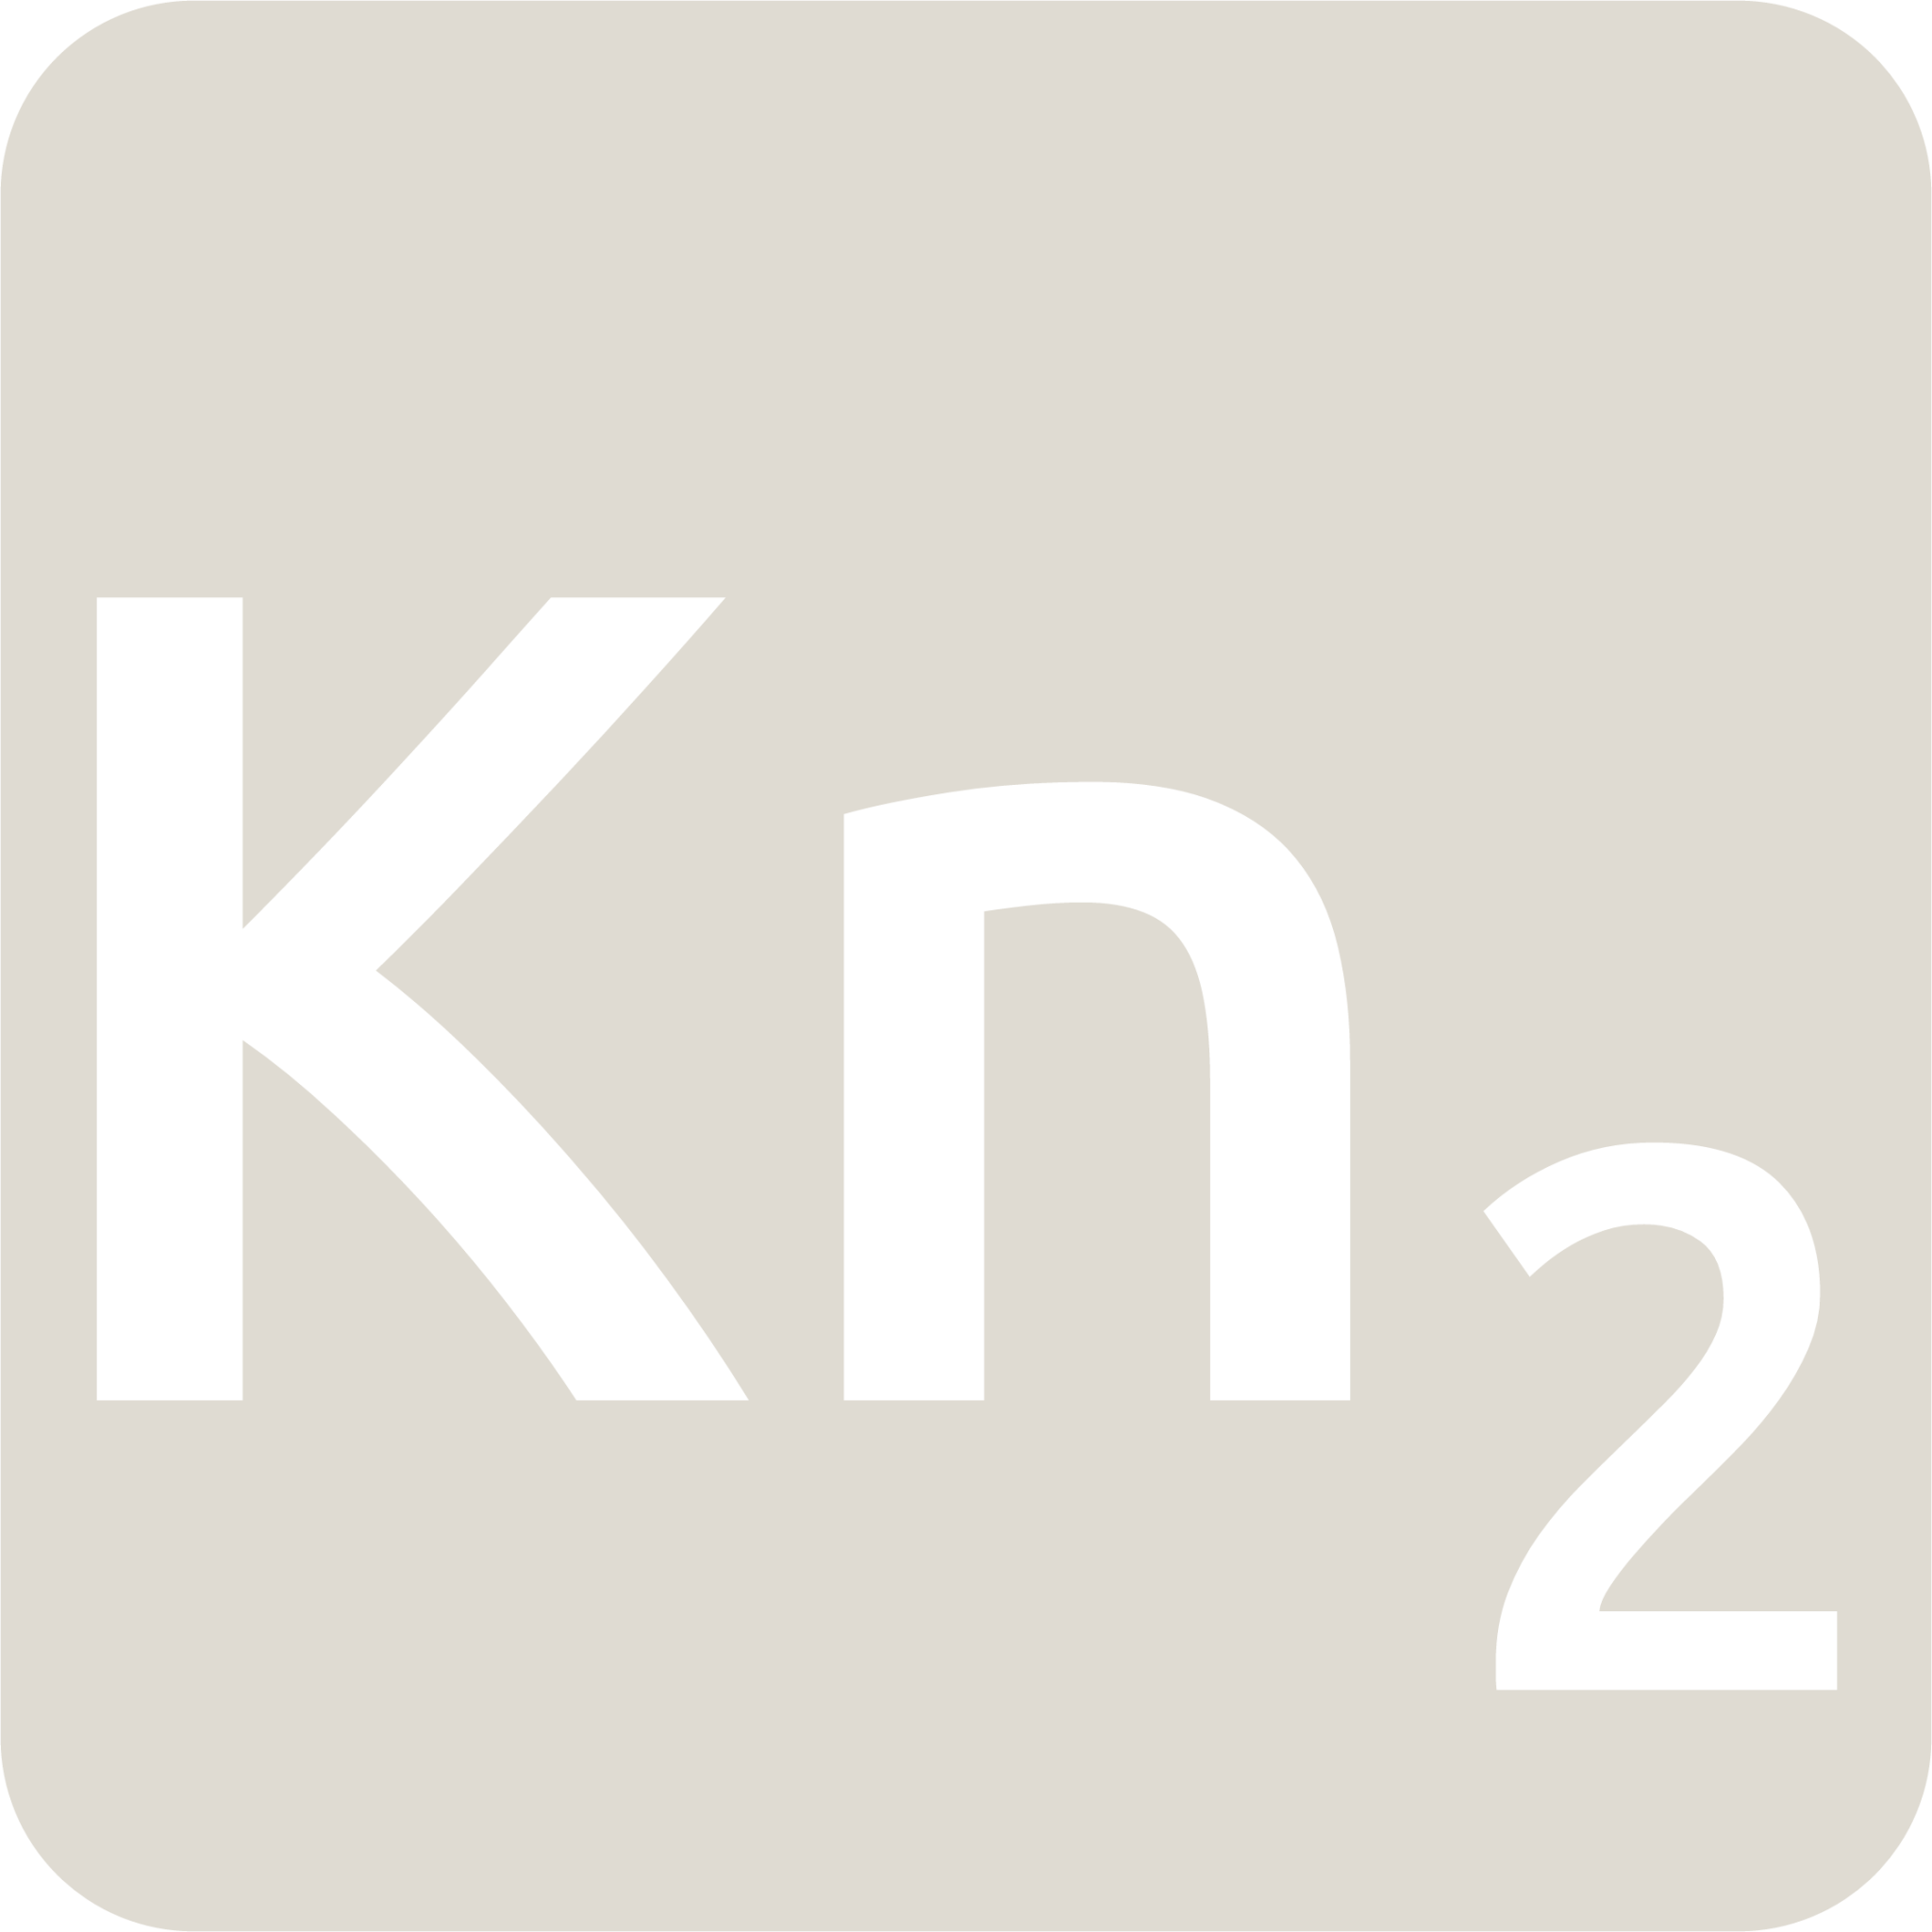 indicator keyboard Kn 2 icon